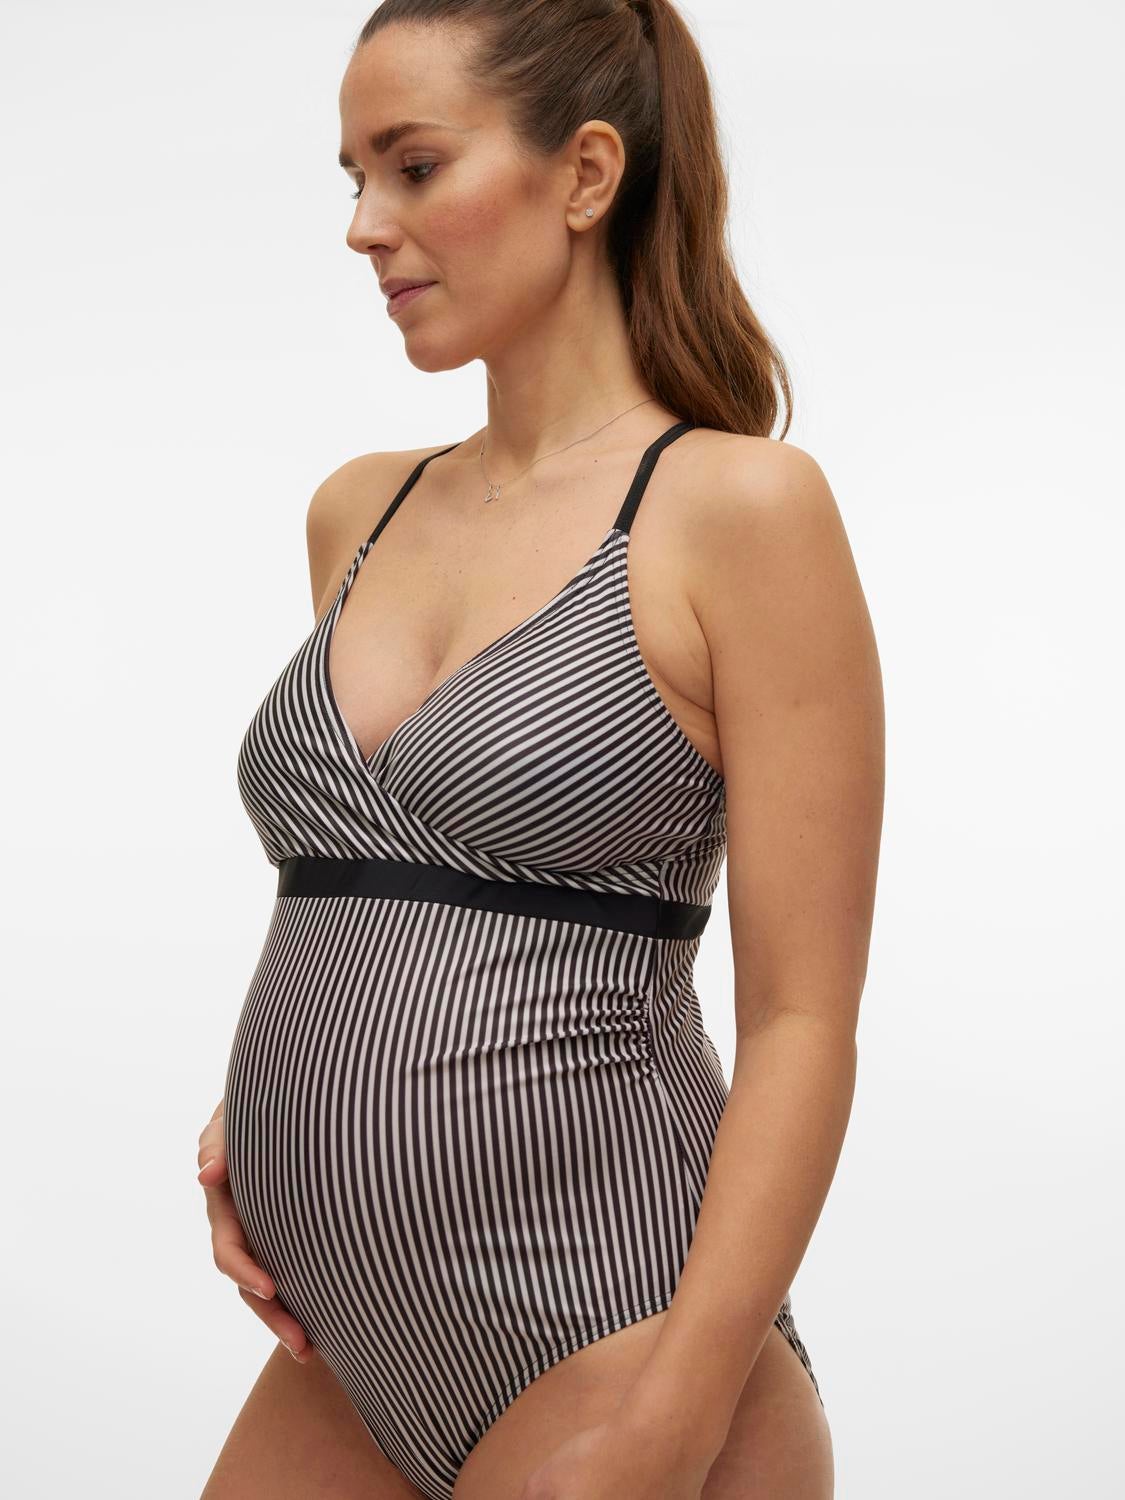 Plunge maternity swimsuit  Materinty swimwear / Nursing swimwear